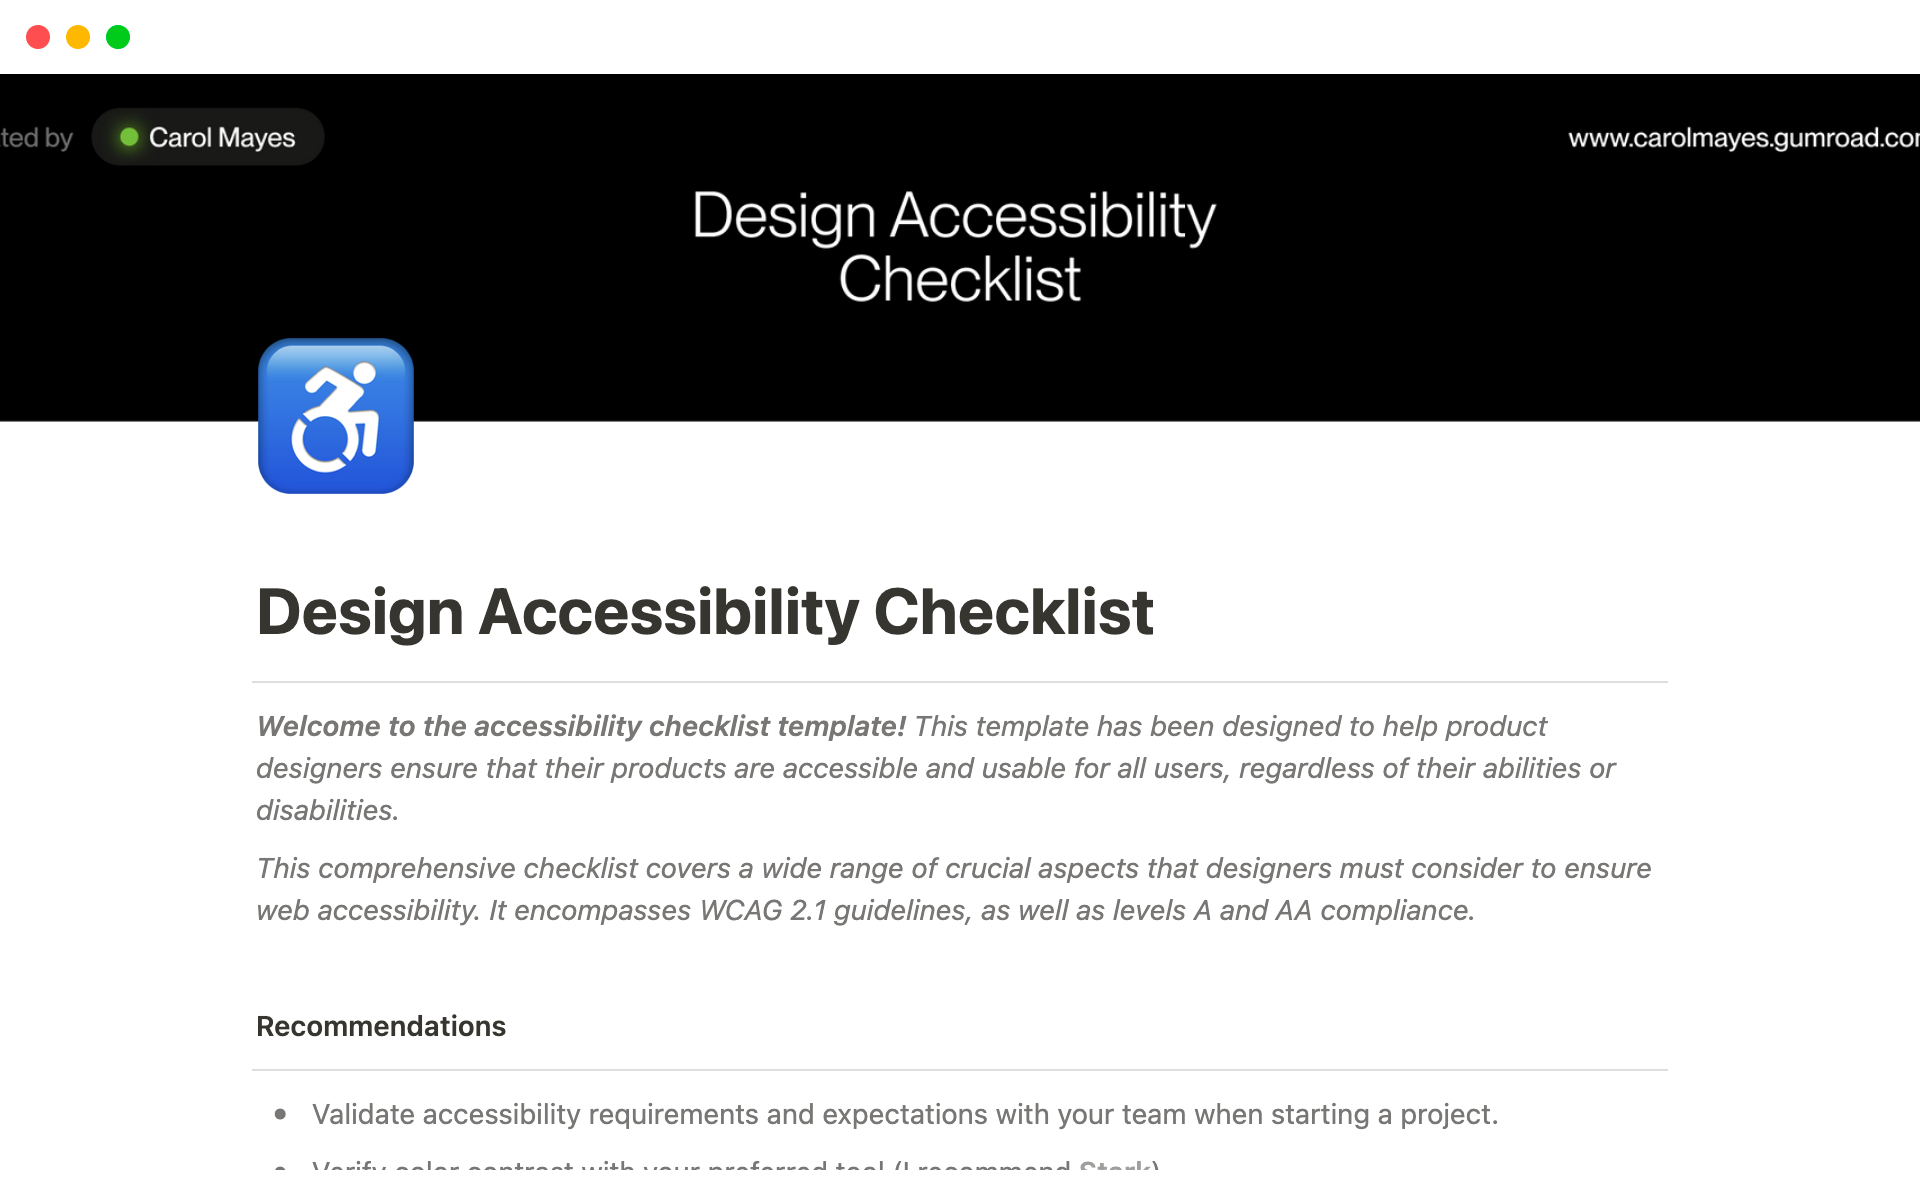 Design Accessibility Checklist님의 템플릿 미리보기